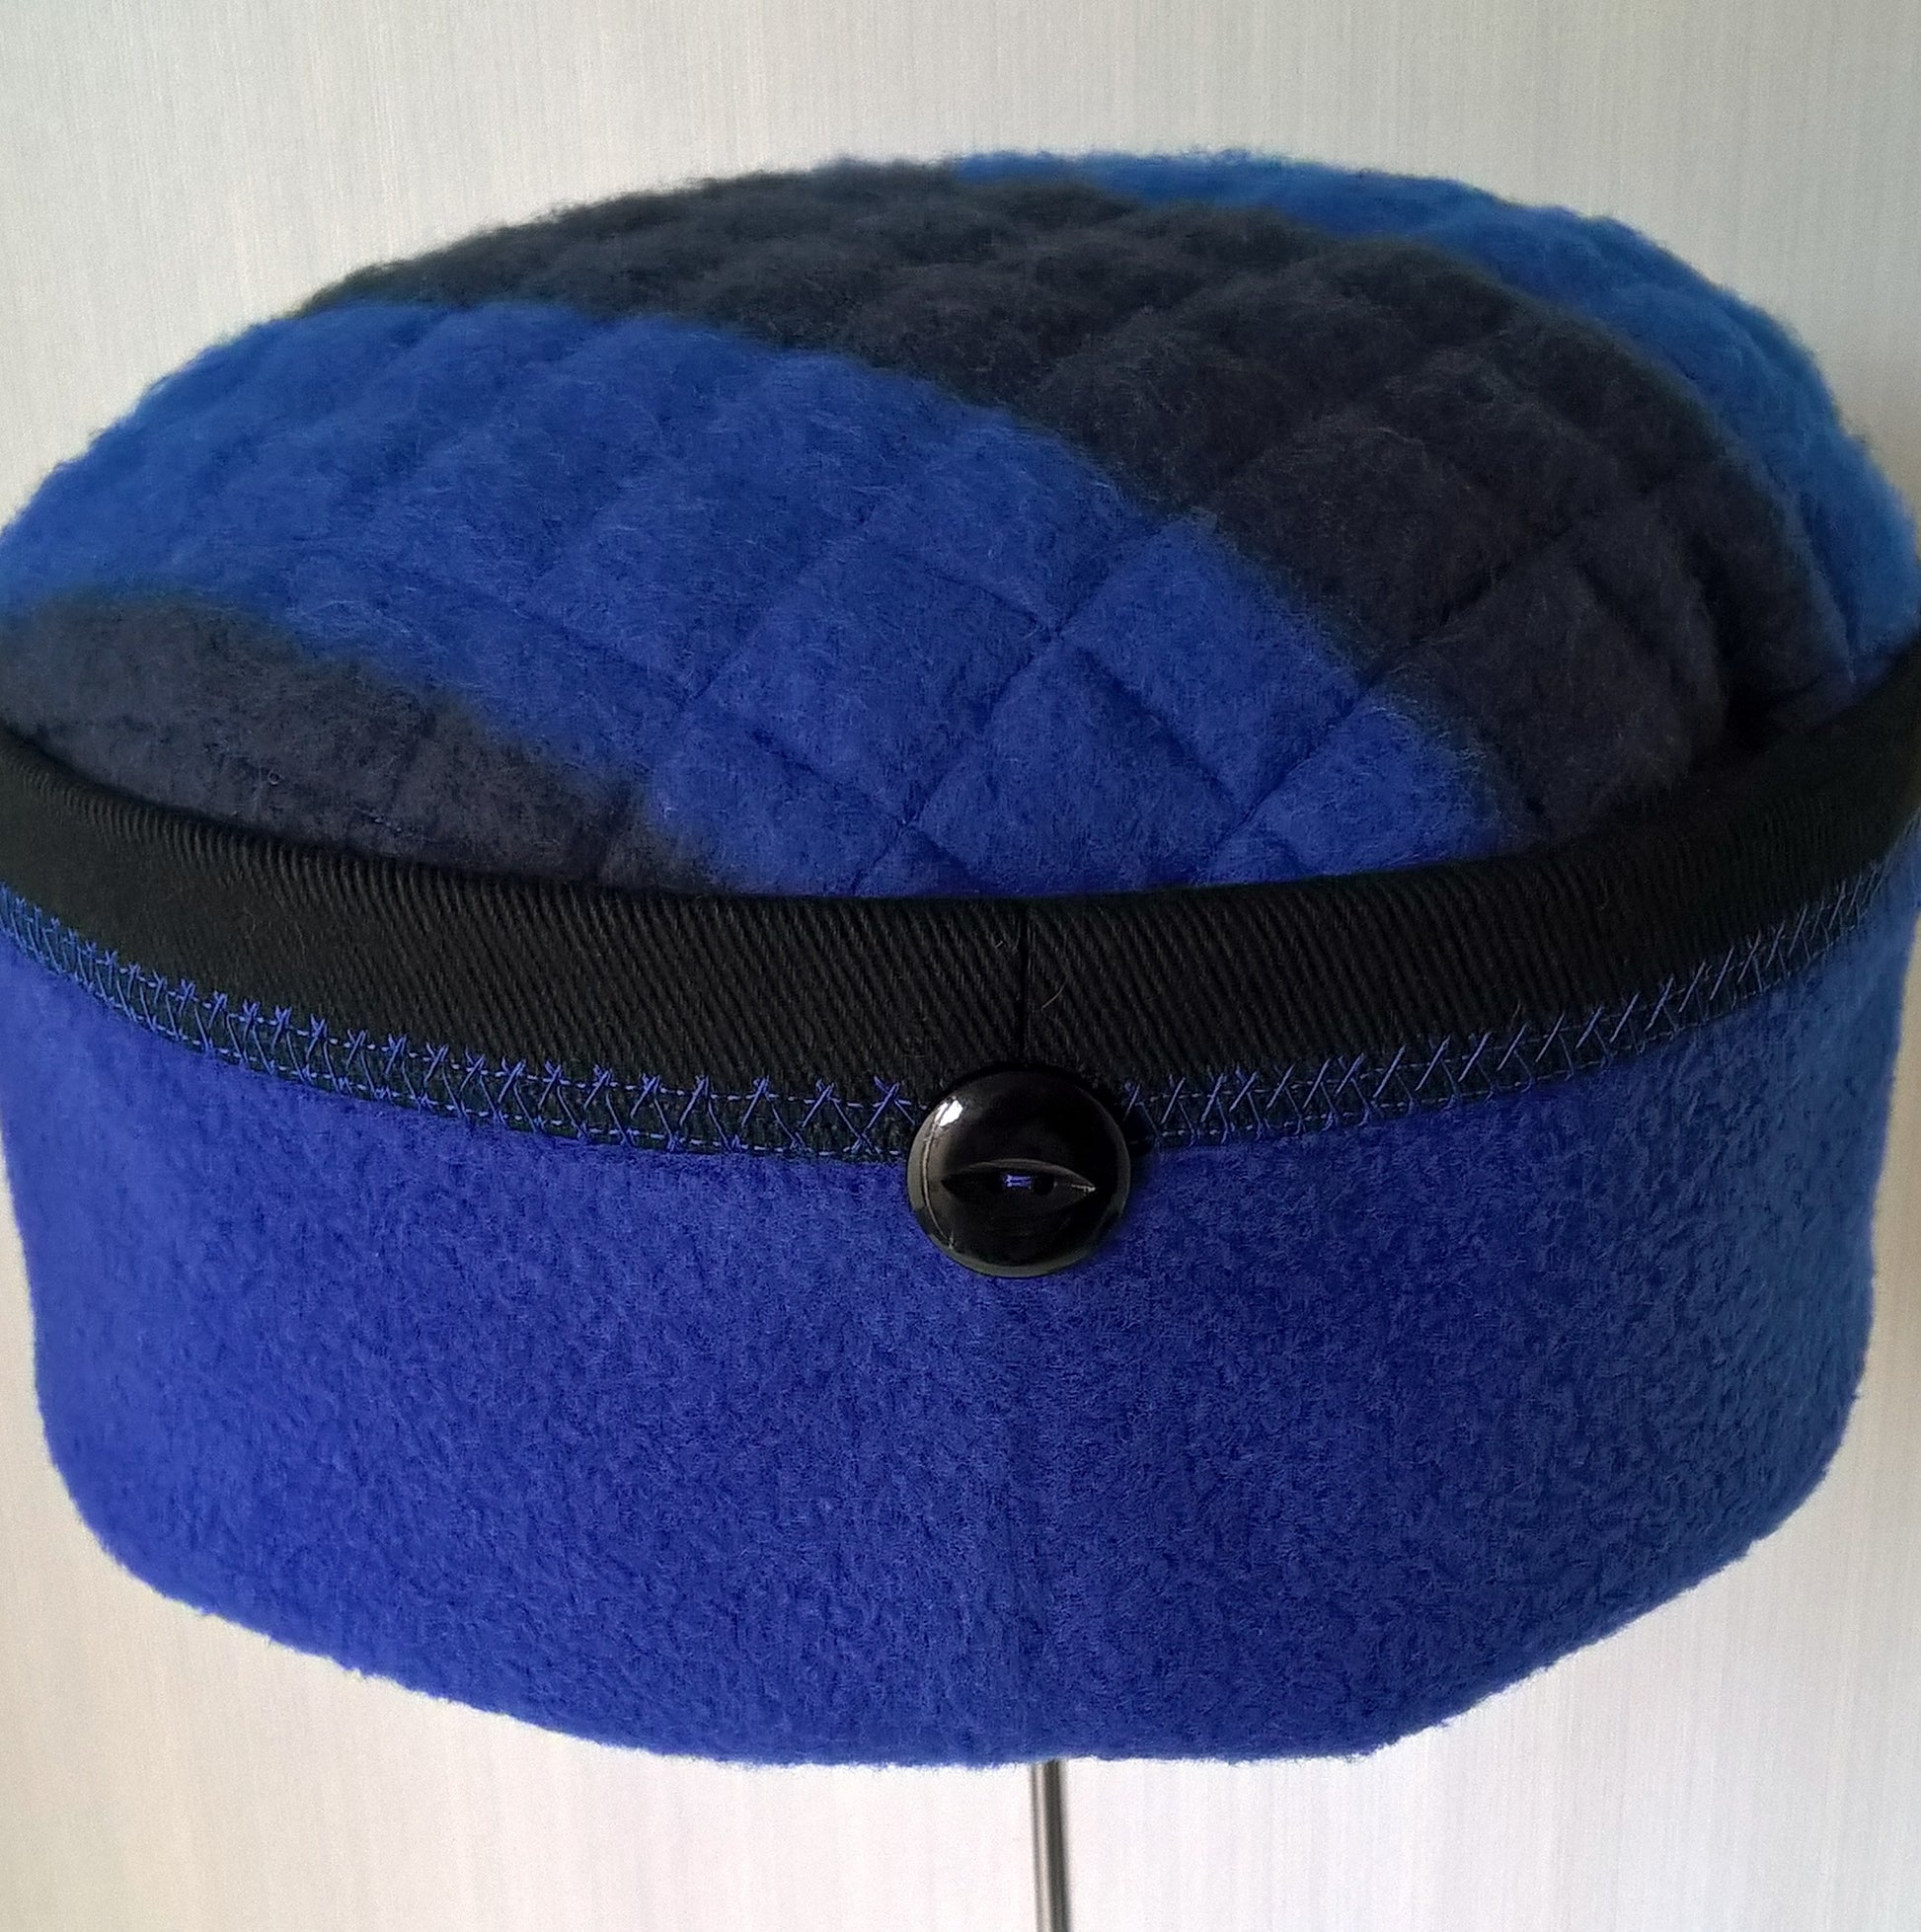 Cobalt blue fleece hat with black button detail at centre back